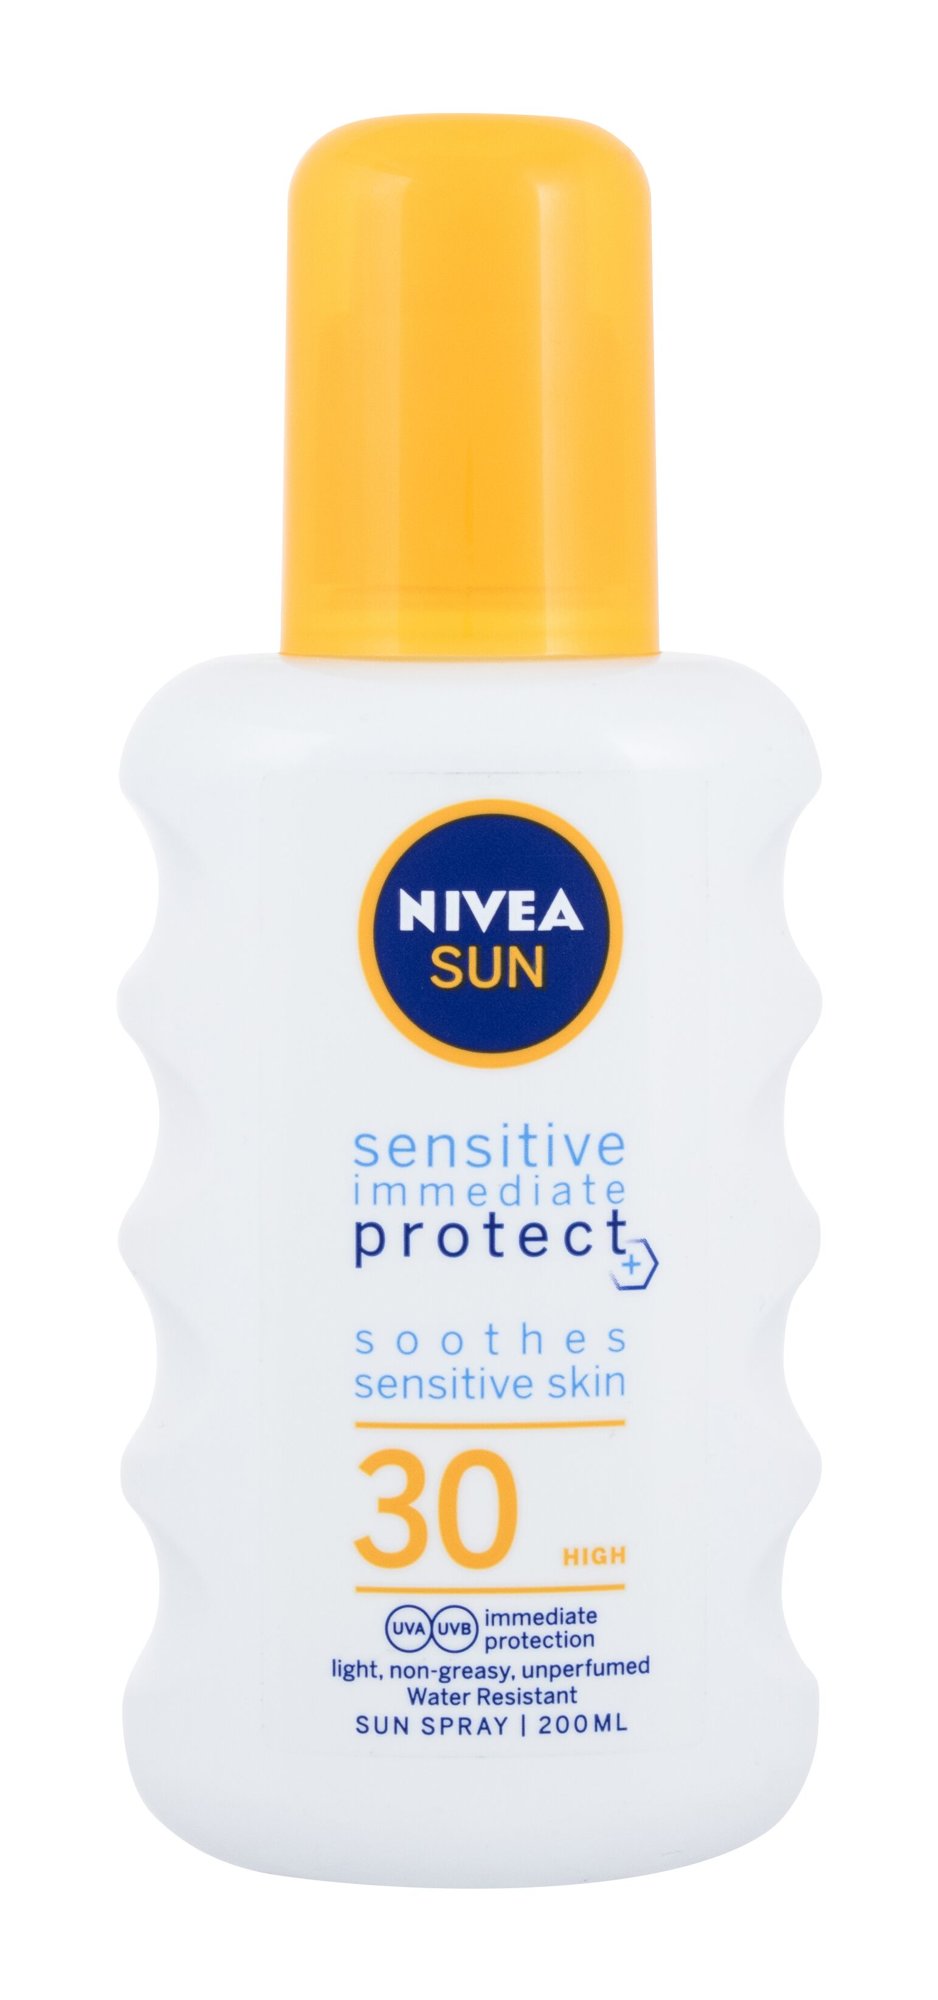 Nivea Sun Sensitive Immediate Protect+ įdegio losjonas